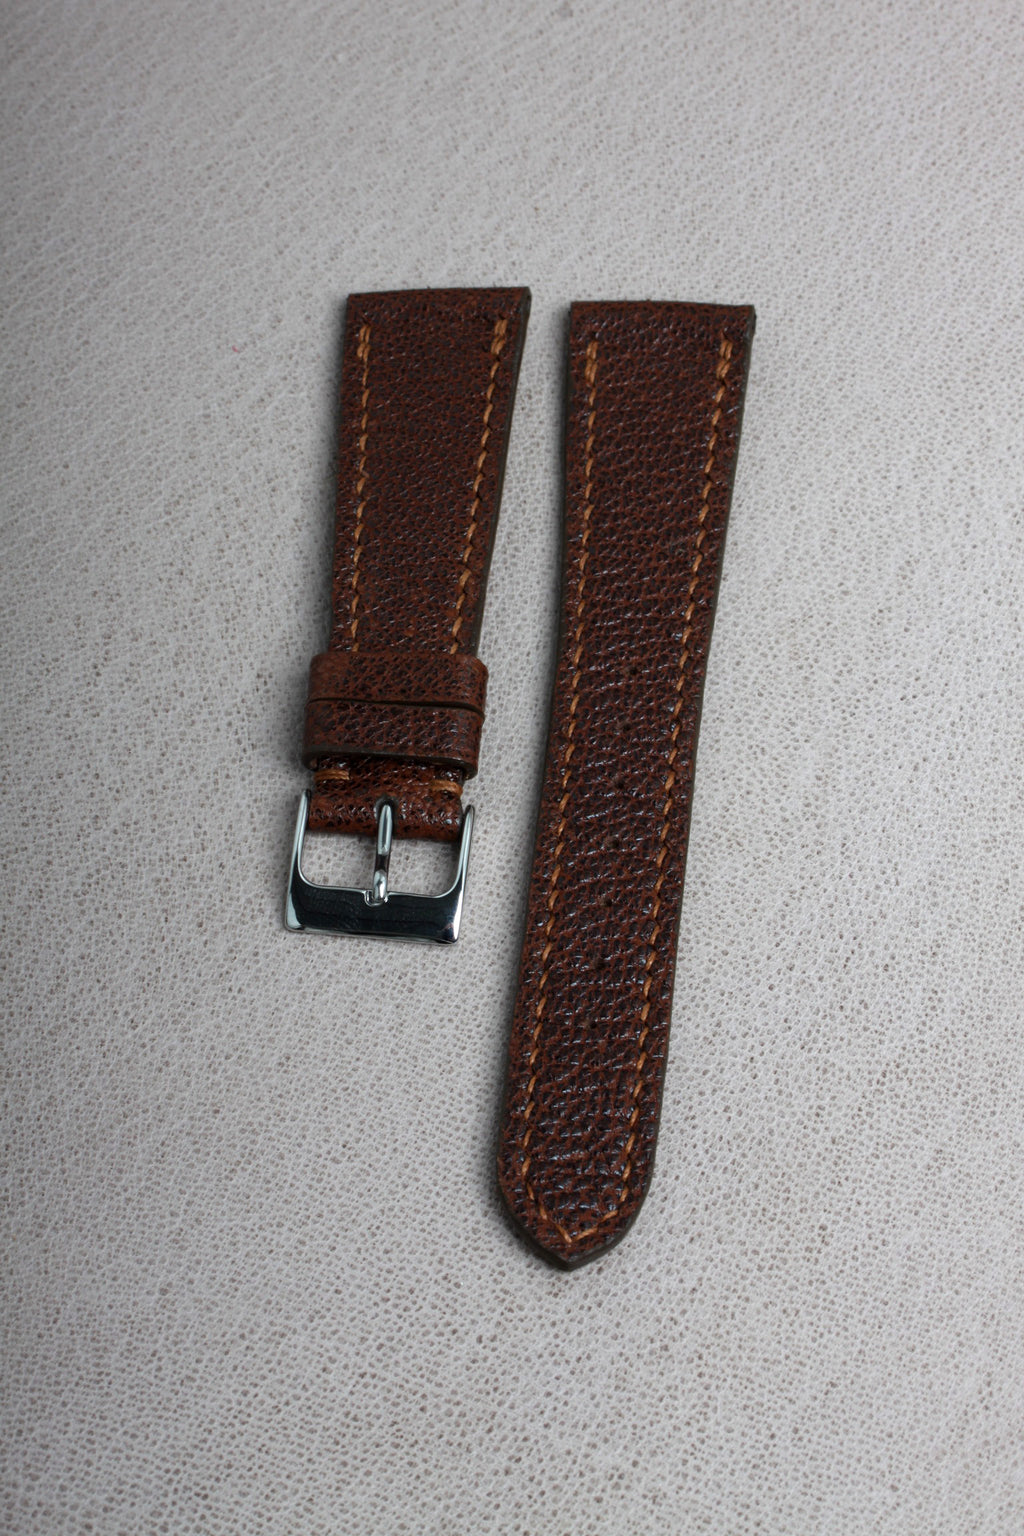 Vintage Brown Goatskin Watch Strap - David Lane Design